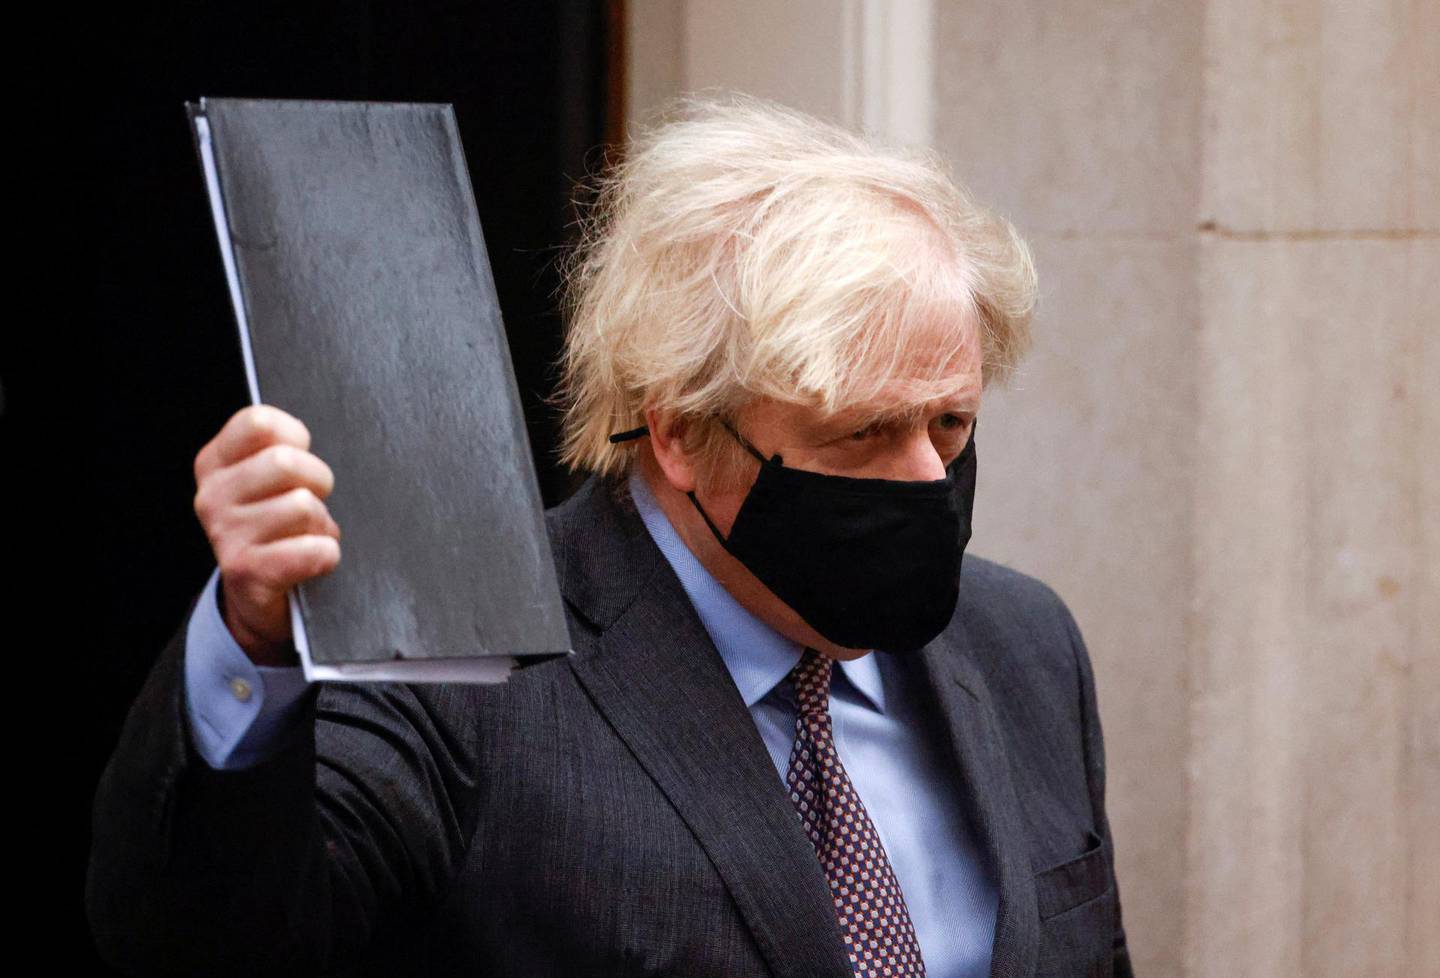 Britain's Prime Minister Boris Johnson leaves Downing Street in London, Britain, February 22, 2021. REUTERS/John Sibley